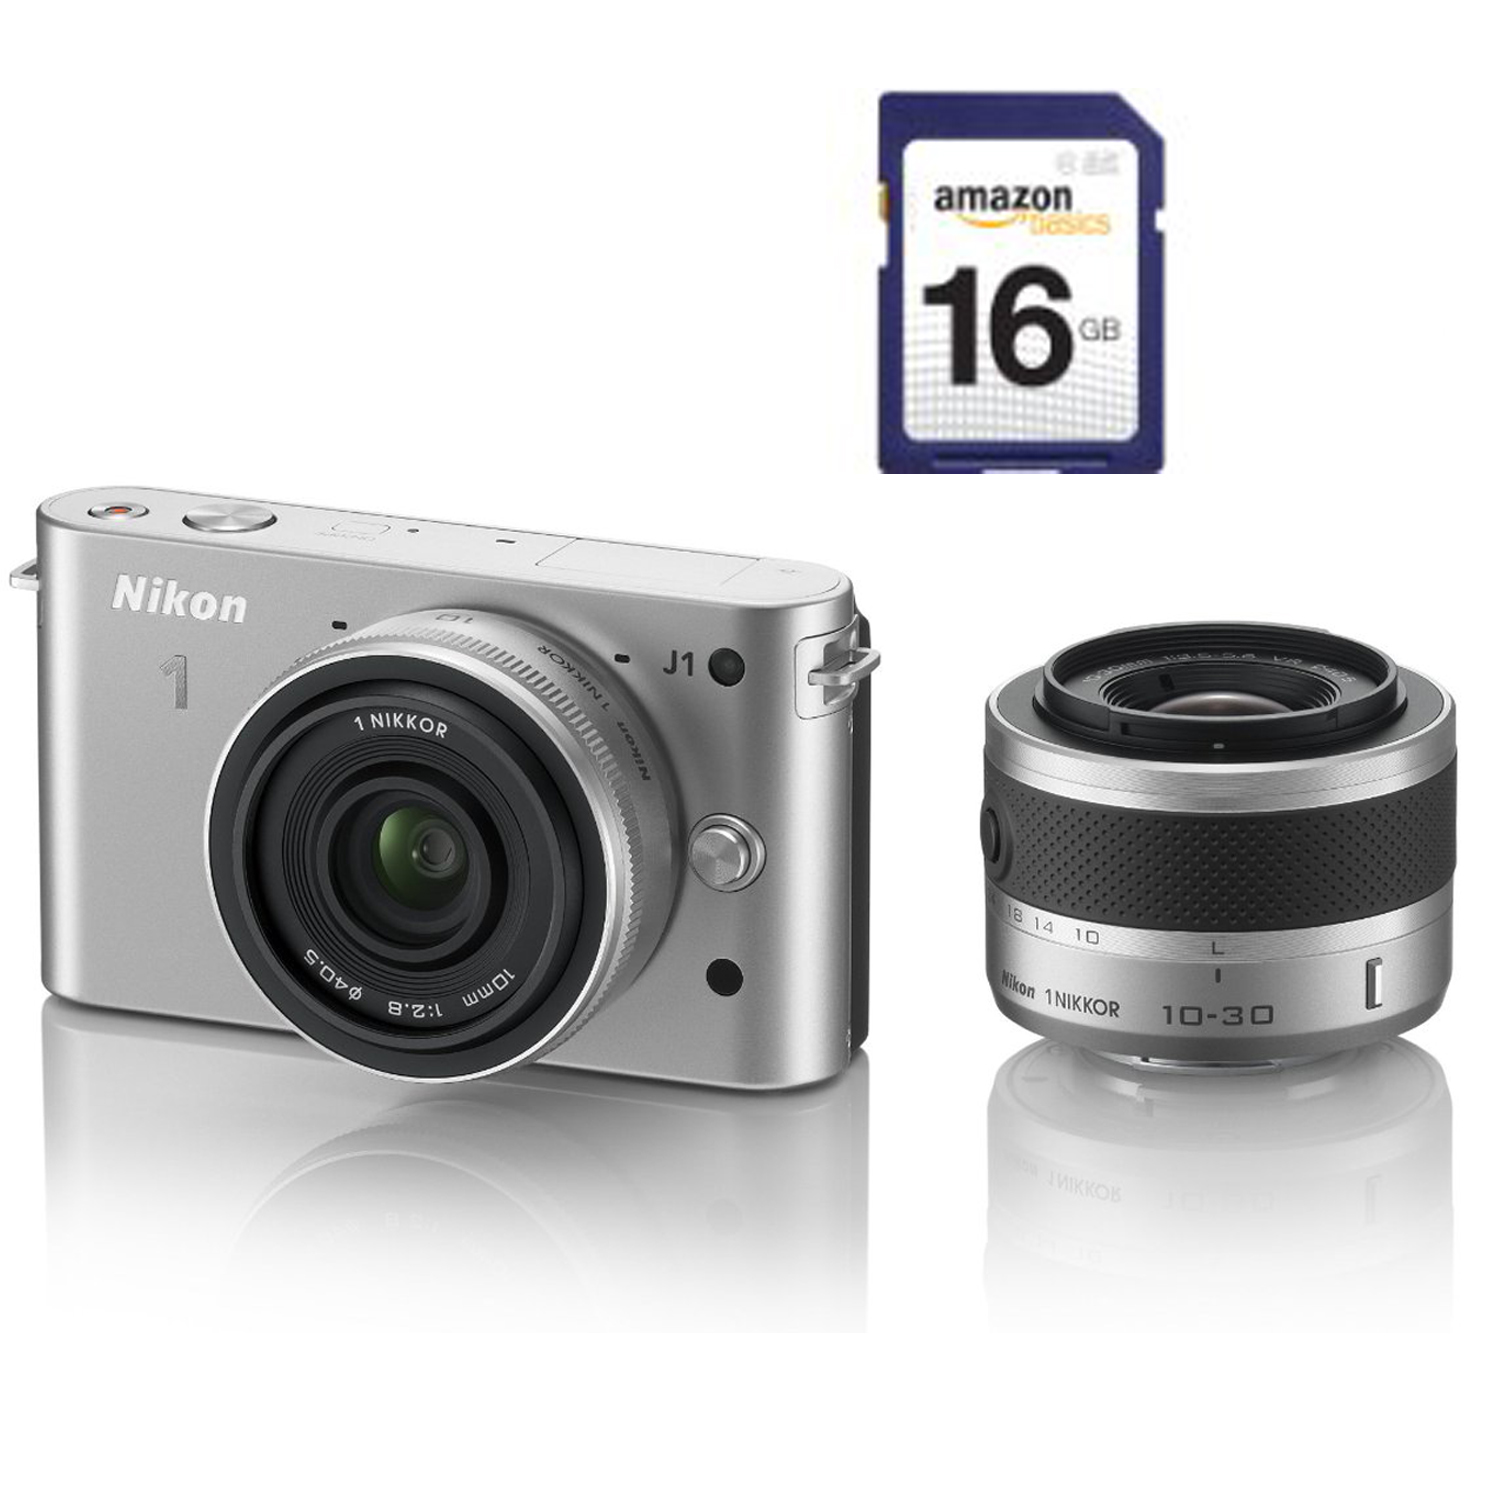 Amazon: Buy a Nikon 1 Camera, Get a Free Amazon Basics 16 GB Memory Card 